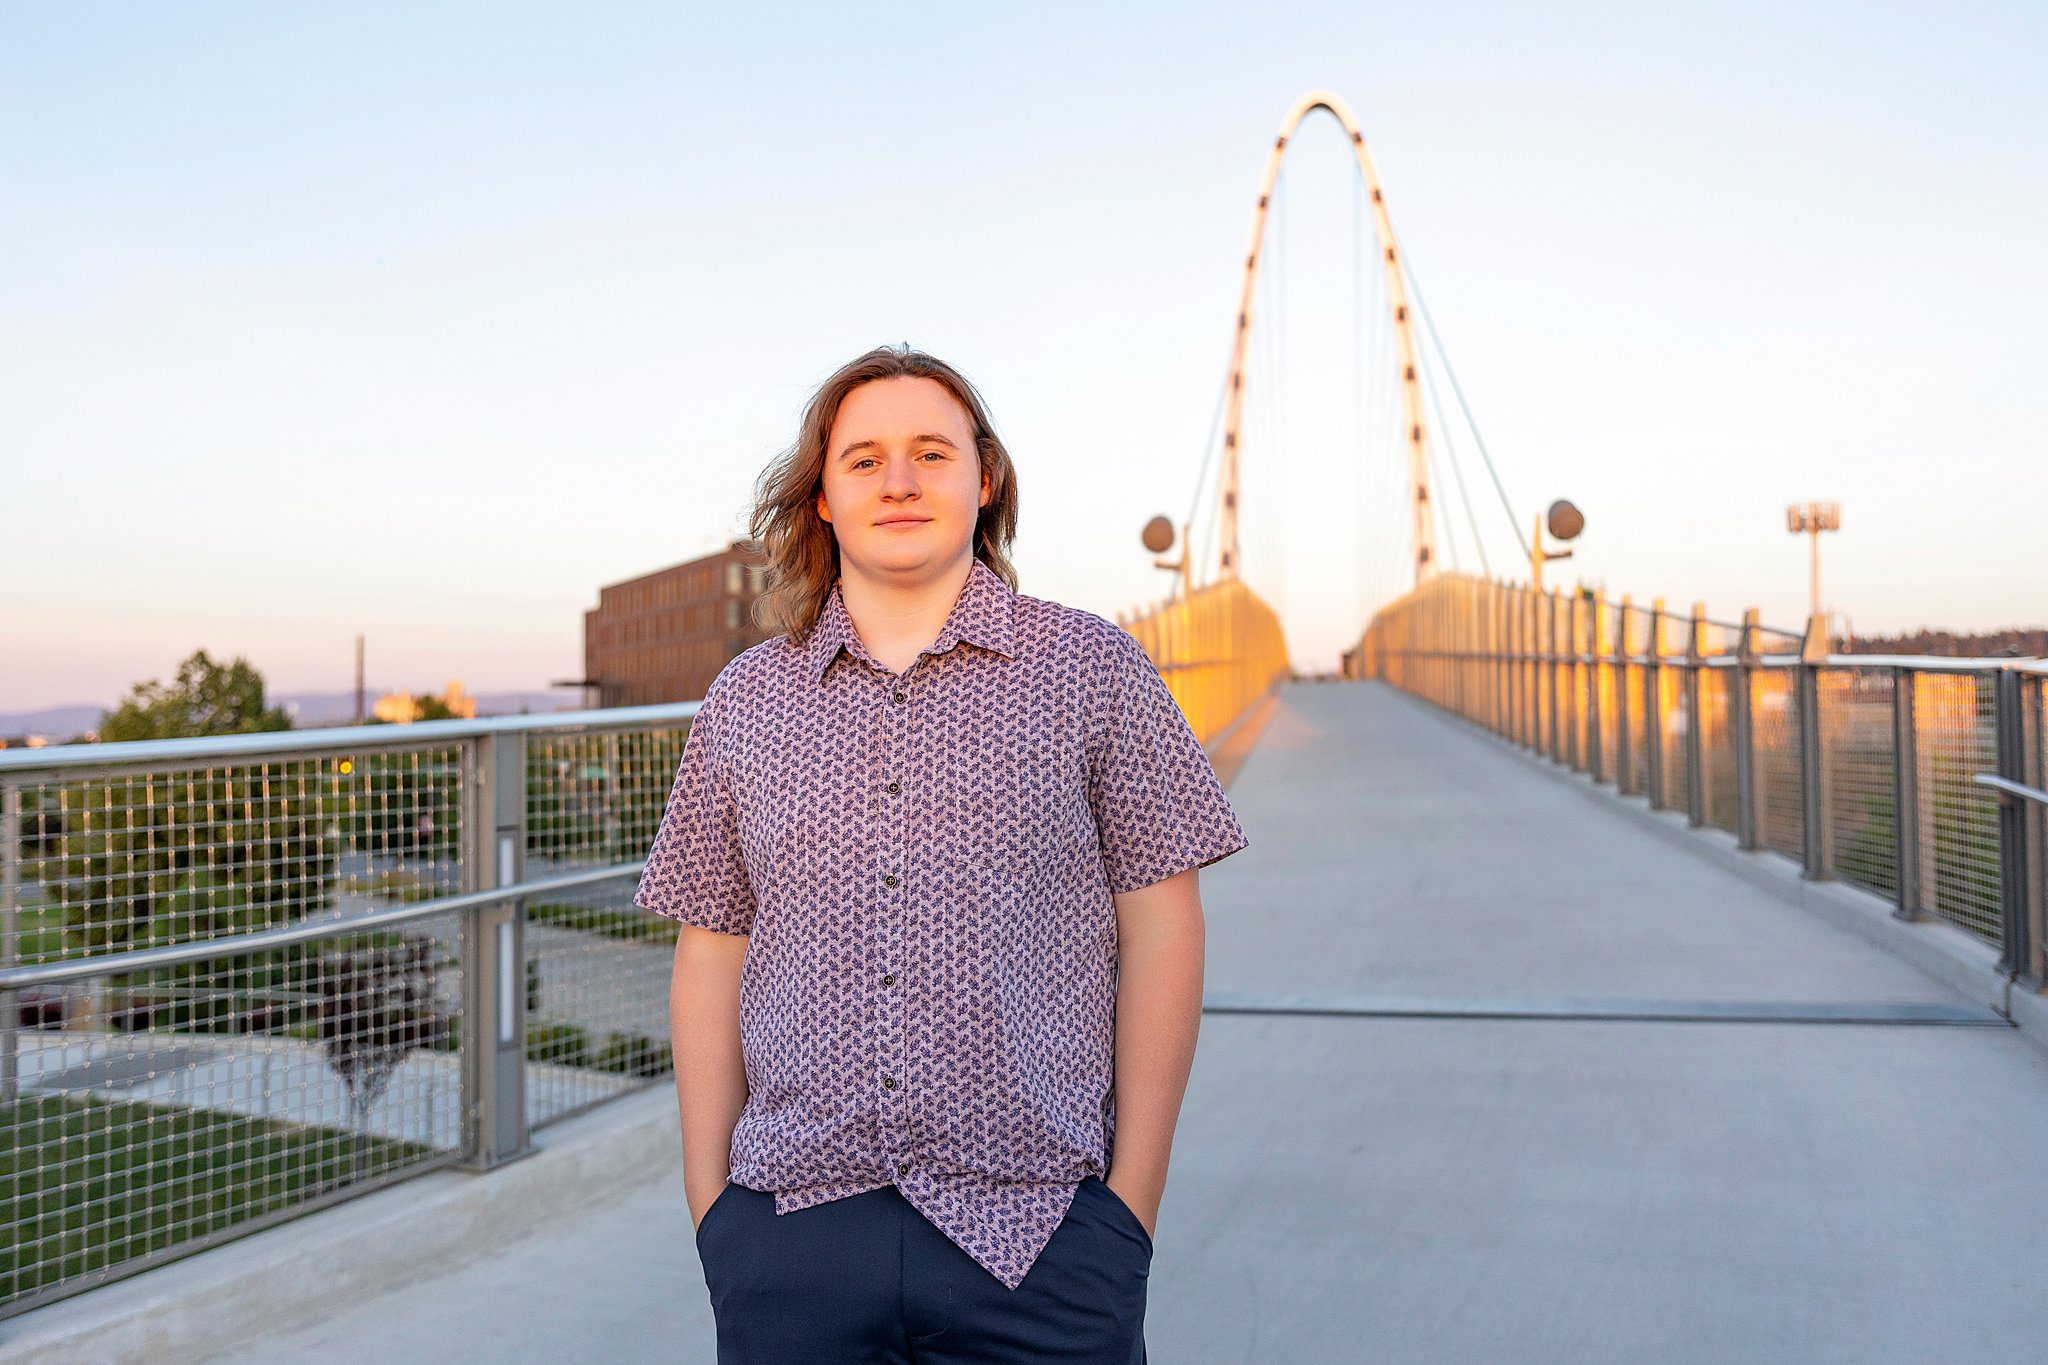 A high school senior in a button-down shirt walks down a pedestrian bridge at sunset